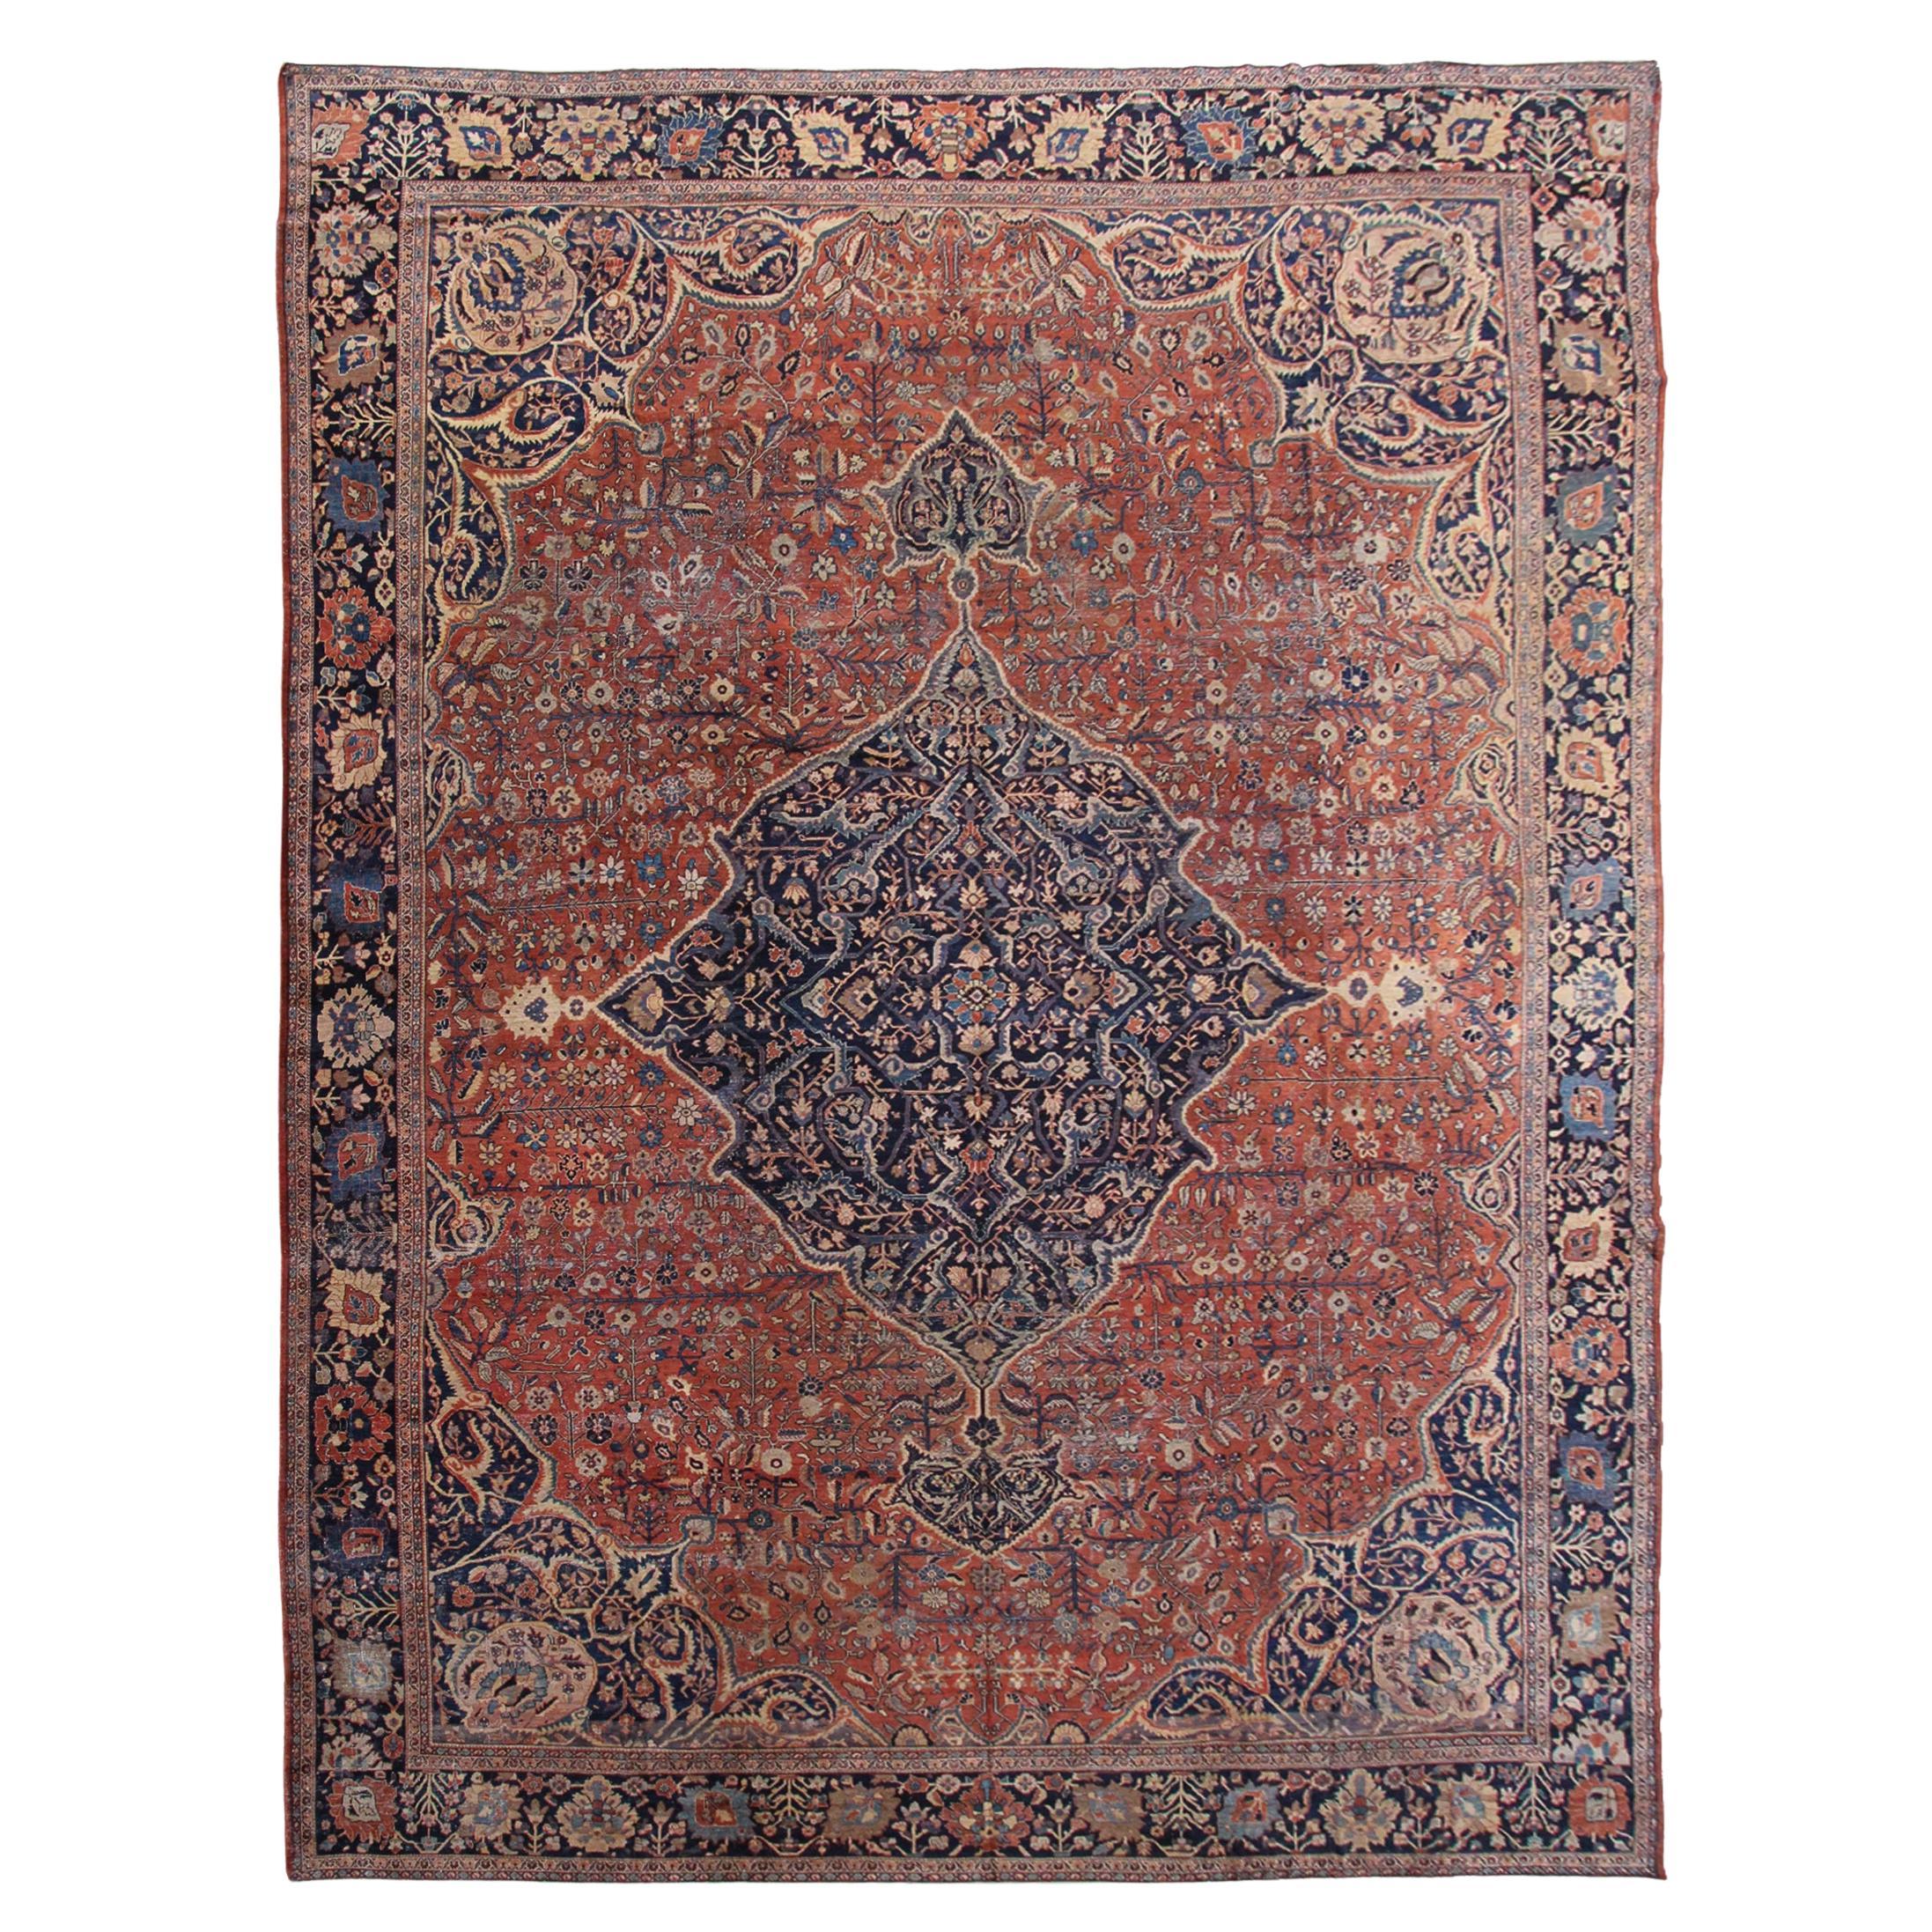 Grand tapis persan ancien de grande taille - Tapis persan ancien Farahan surdimensionné en vente